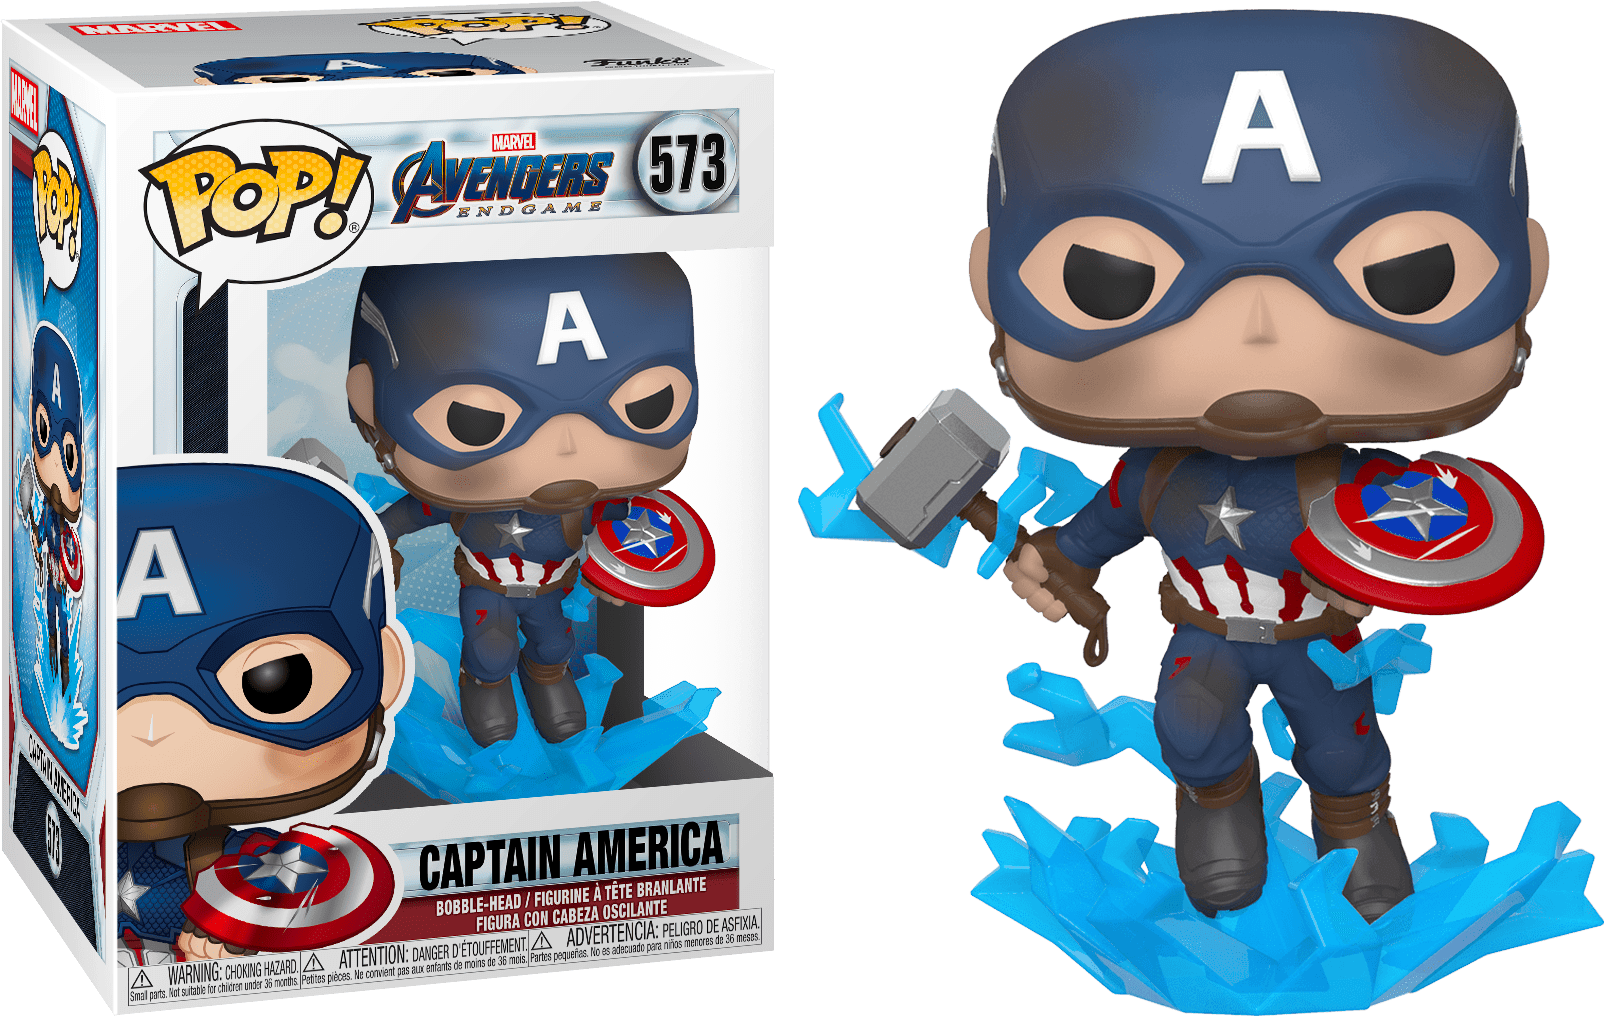 Avengers 4: Endgame - Captain America with Mjolnir Pop! Vinyl  Funko Titan Pop Culture